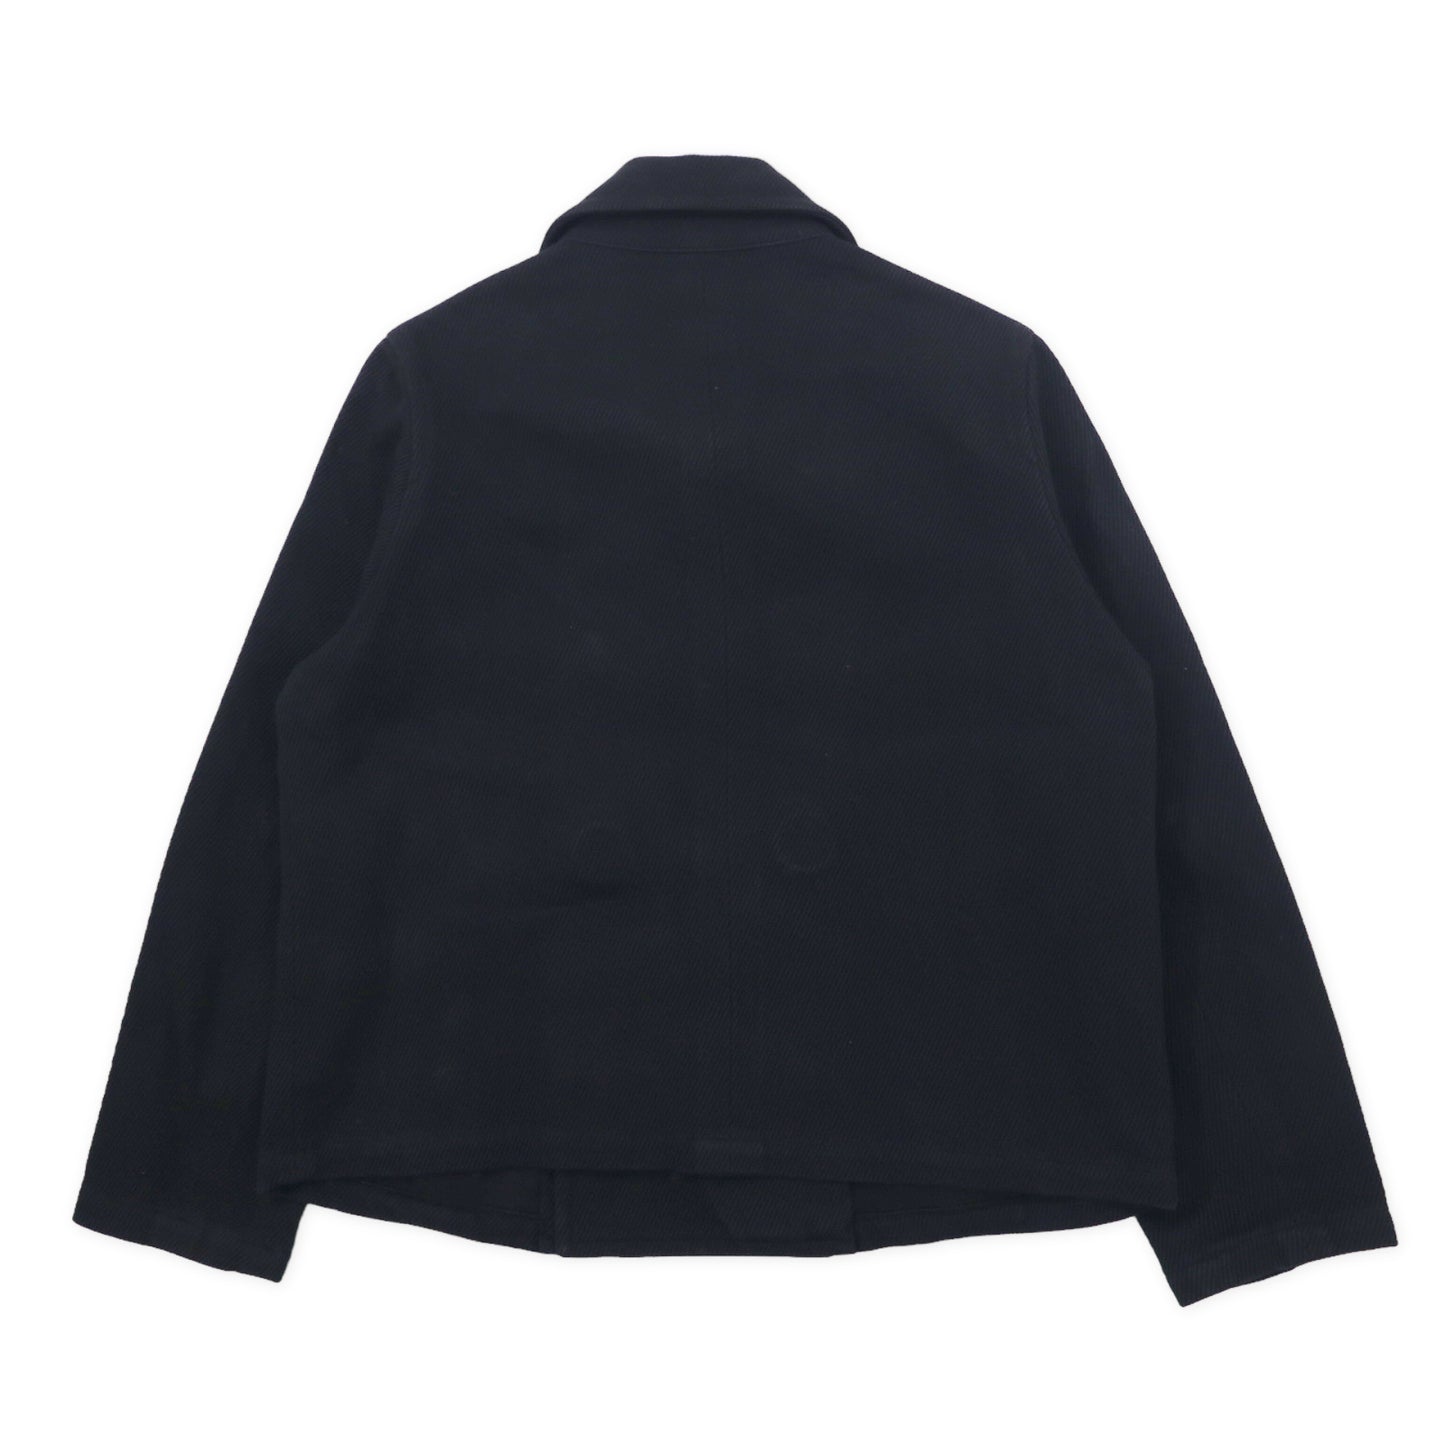 LIMI FEU (YOHJI YAMAMOTO) Double Blest Short COAT S Black Cotton 